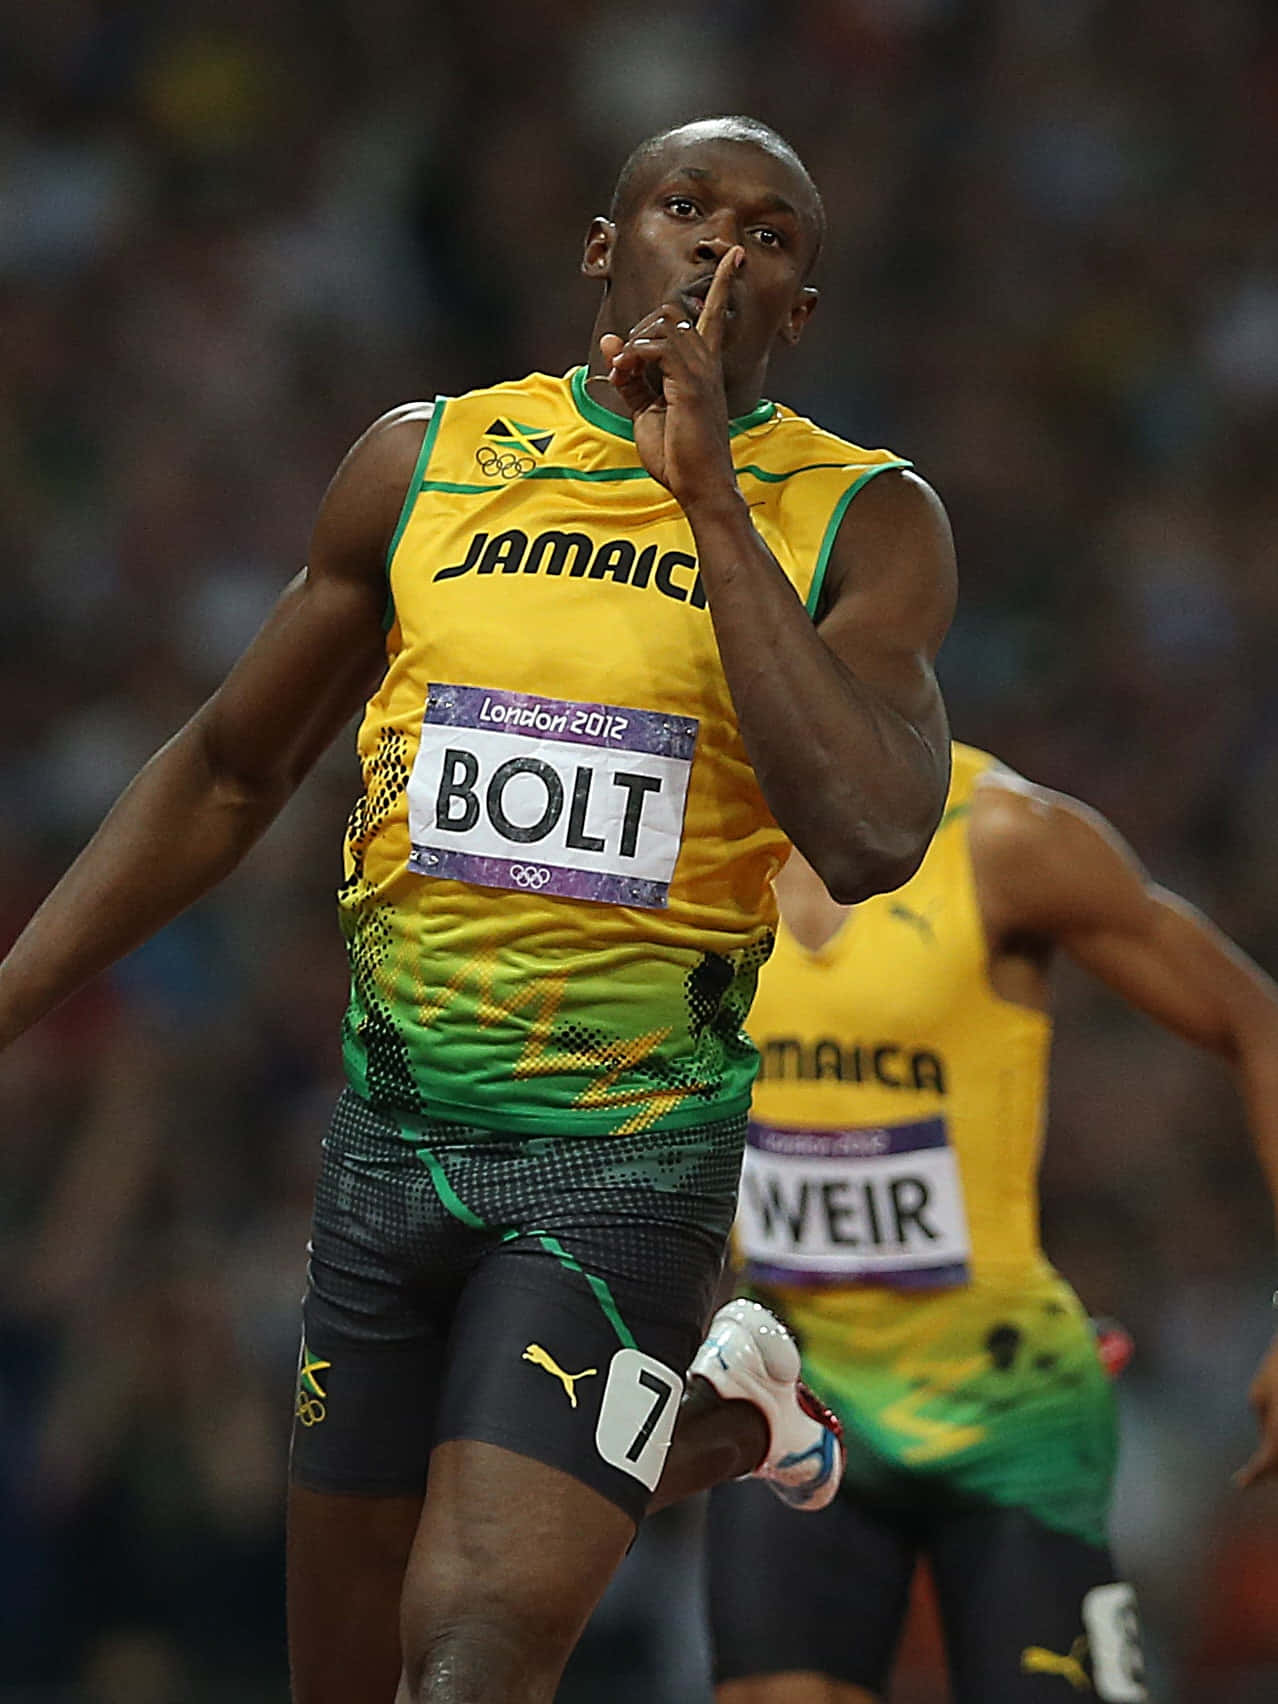 Jamaikanischerathlet Usain Bolt Hebt Den Finger Hoch. Wallpaper